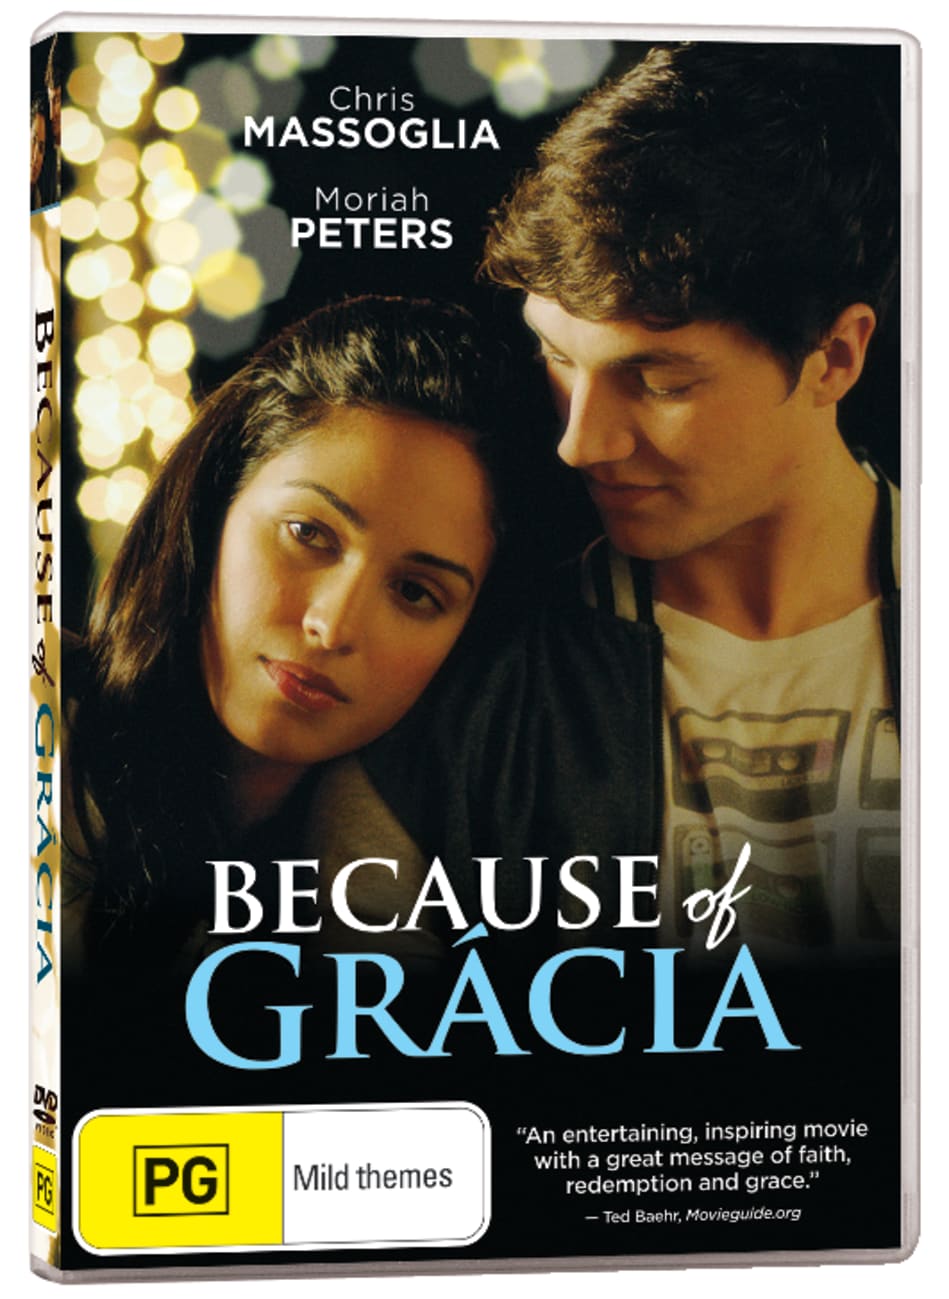 Because of Gracia DVD